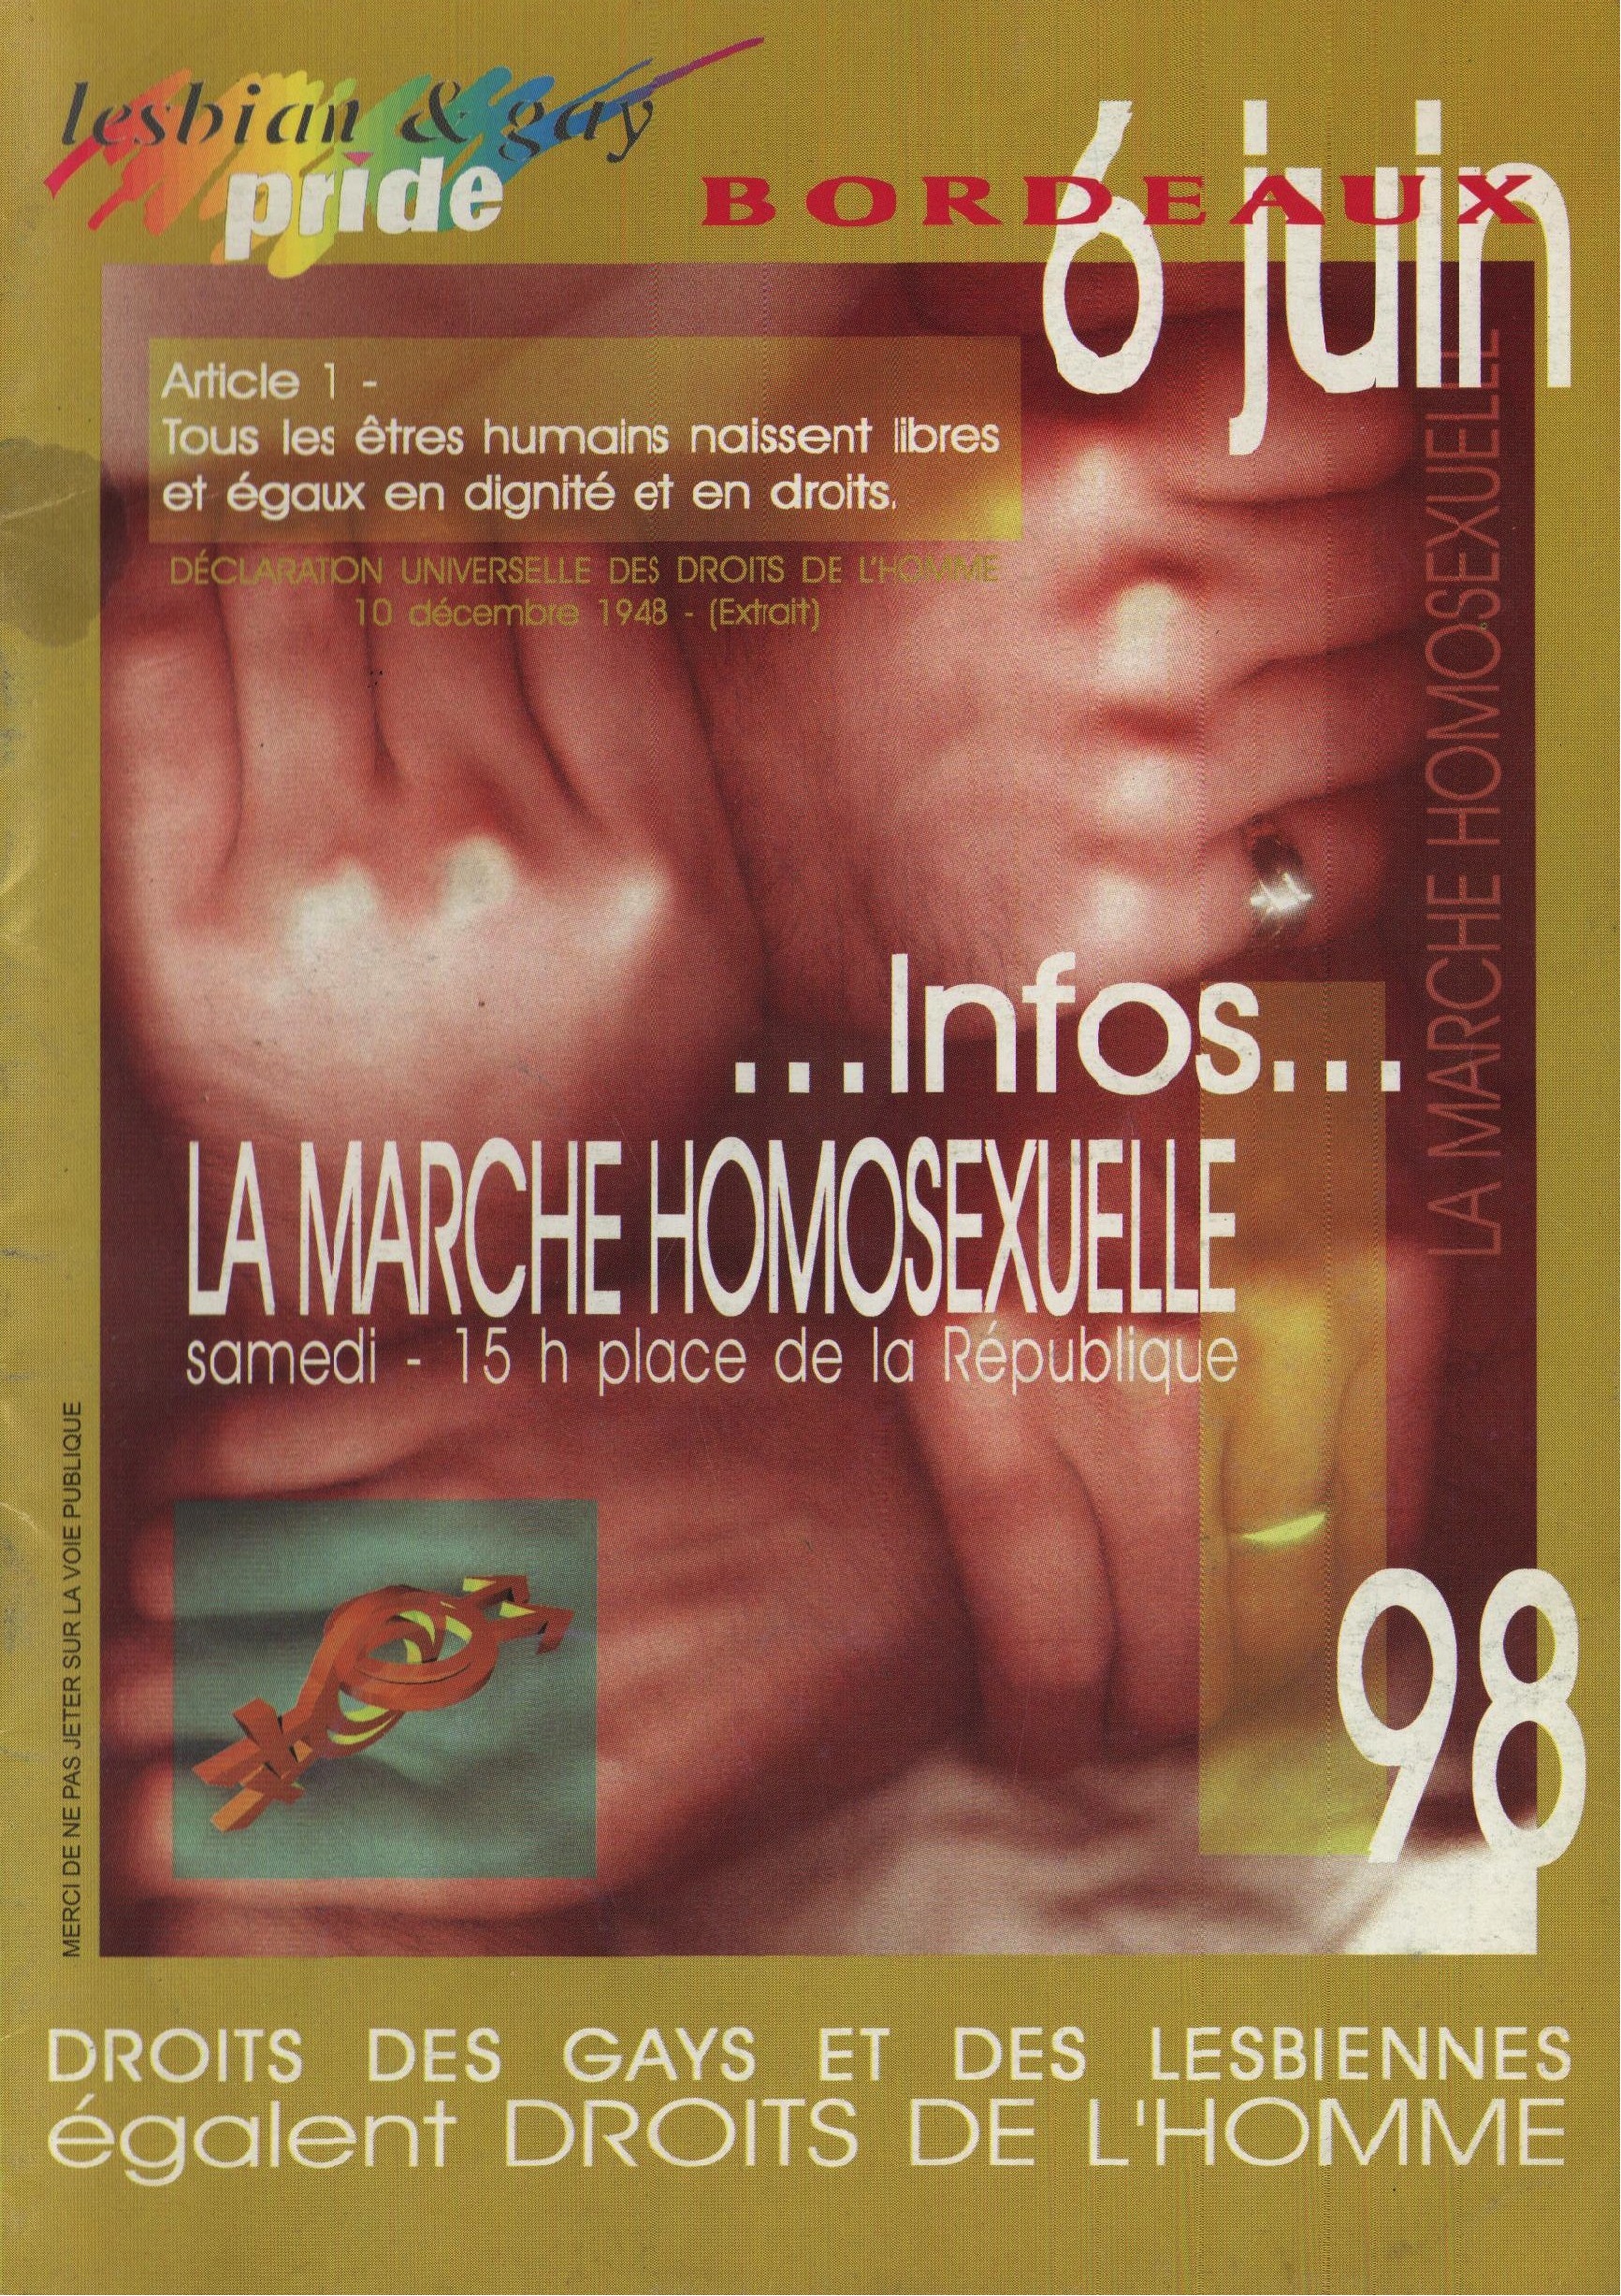 Affiche LGP 1998